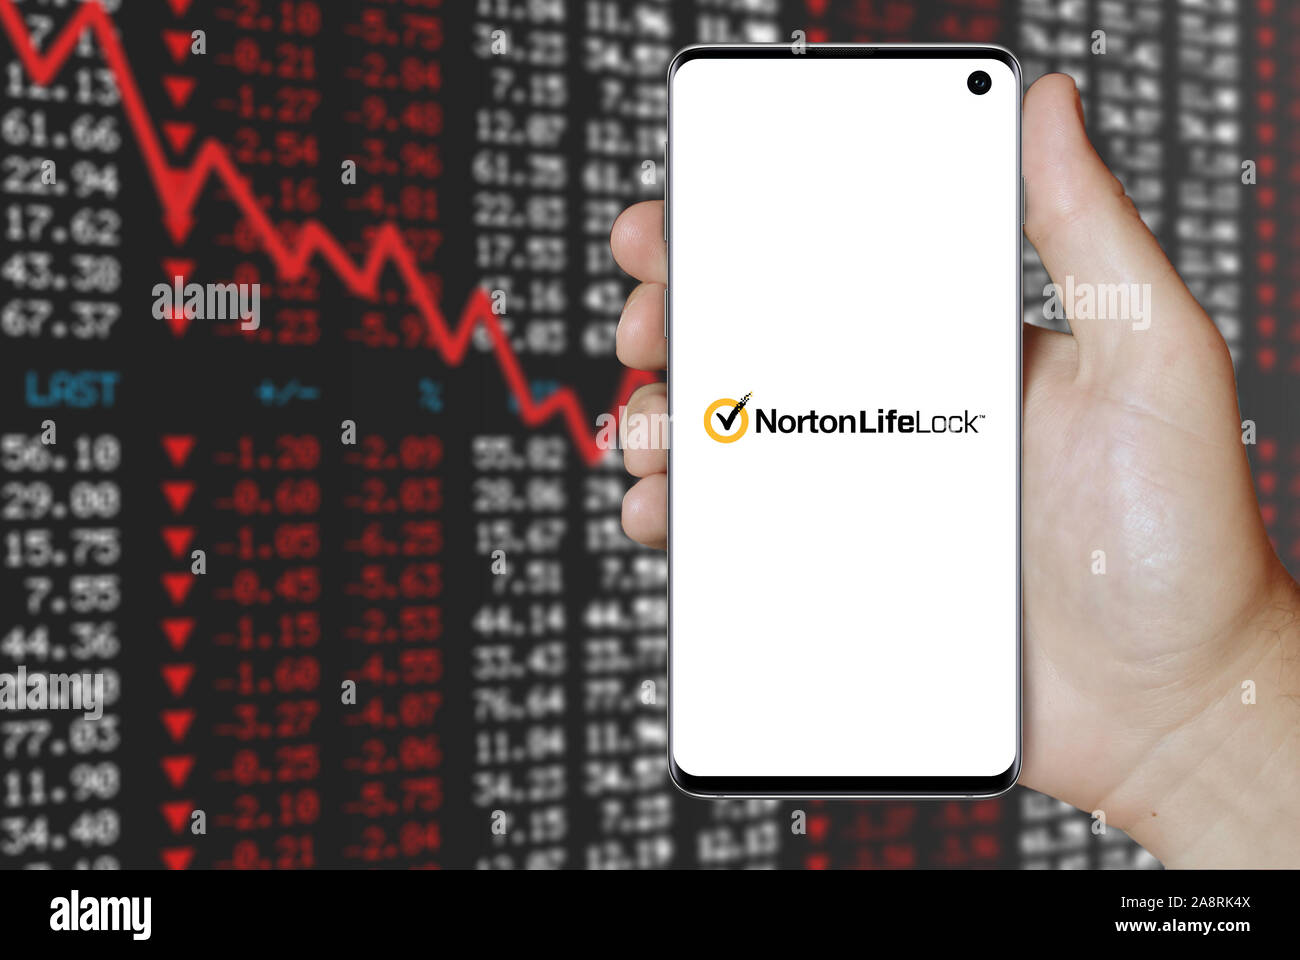 Logo of public company NortonLifeLock displayed on a smartphone. Negative stock market background. Credit: PIXDUCE Stock Photo